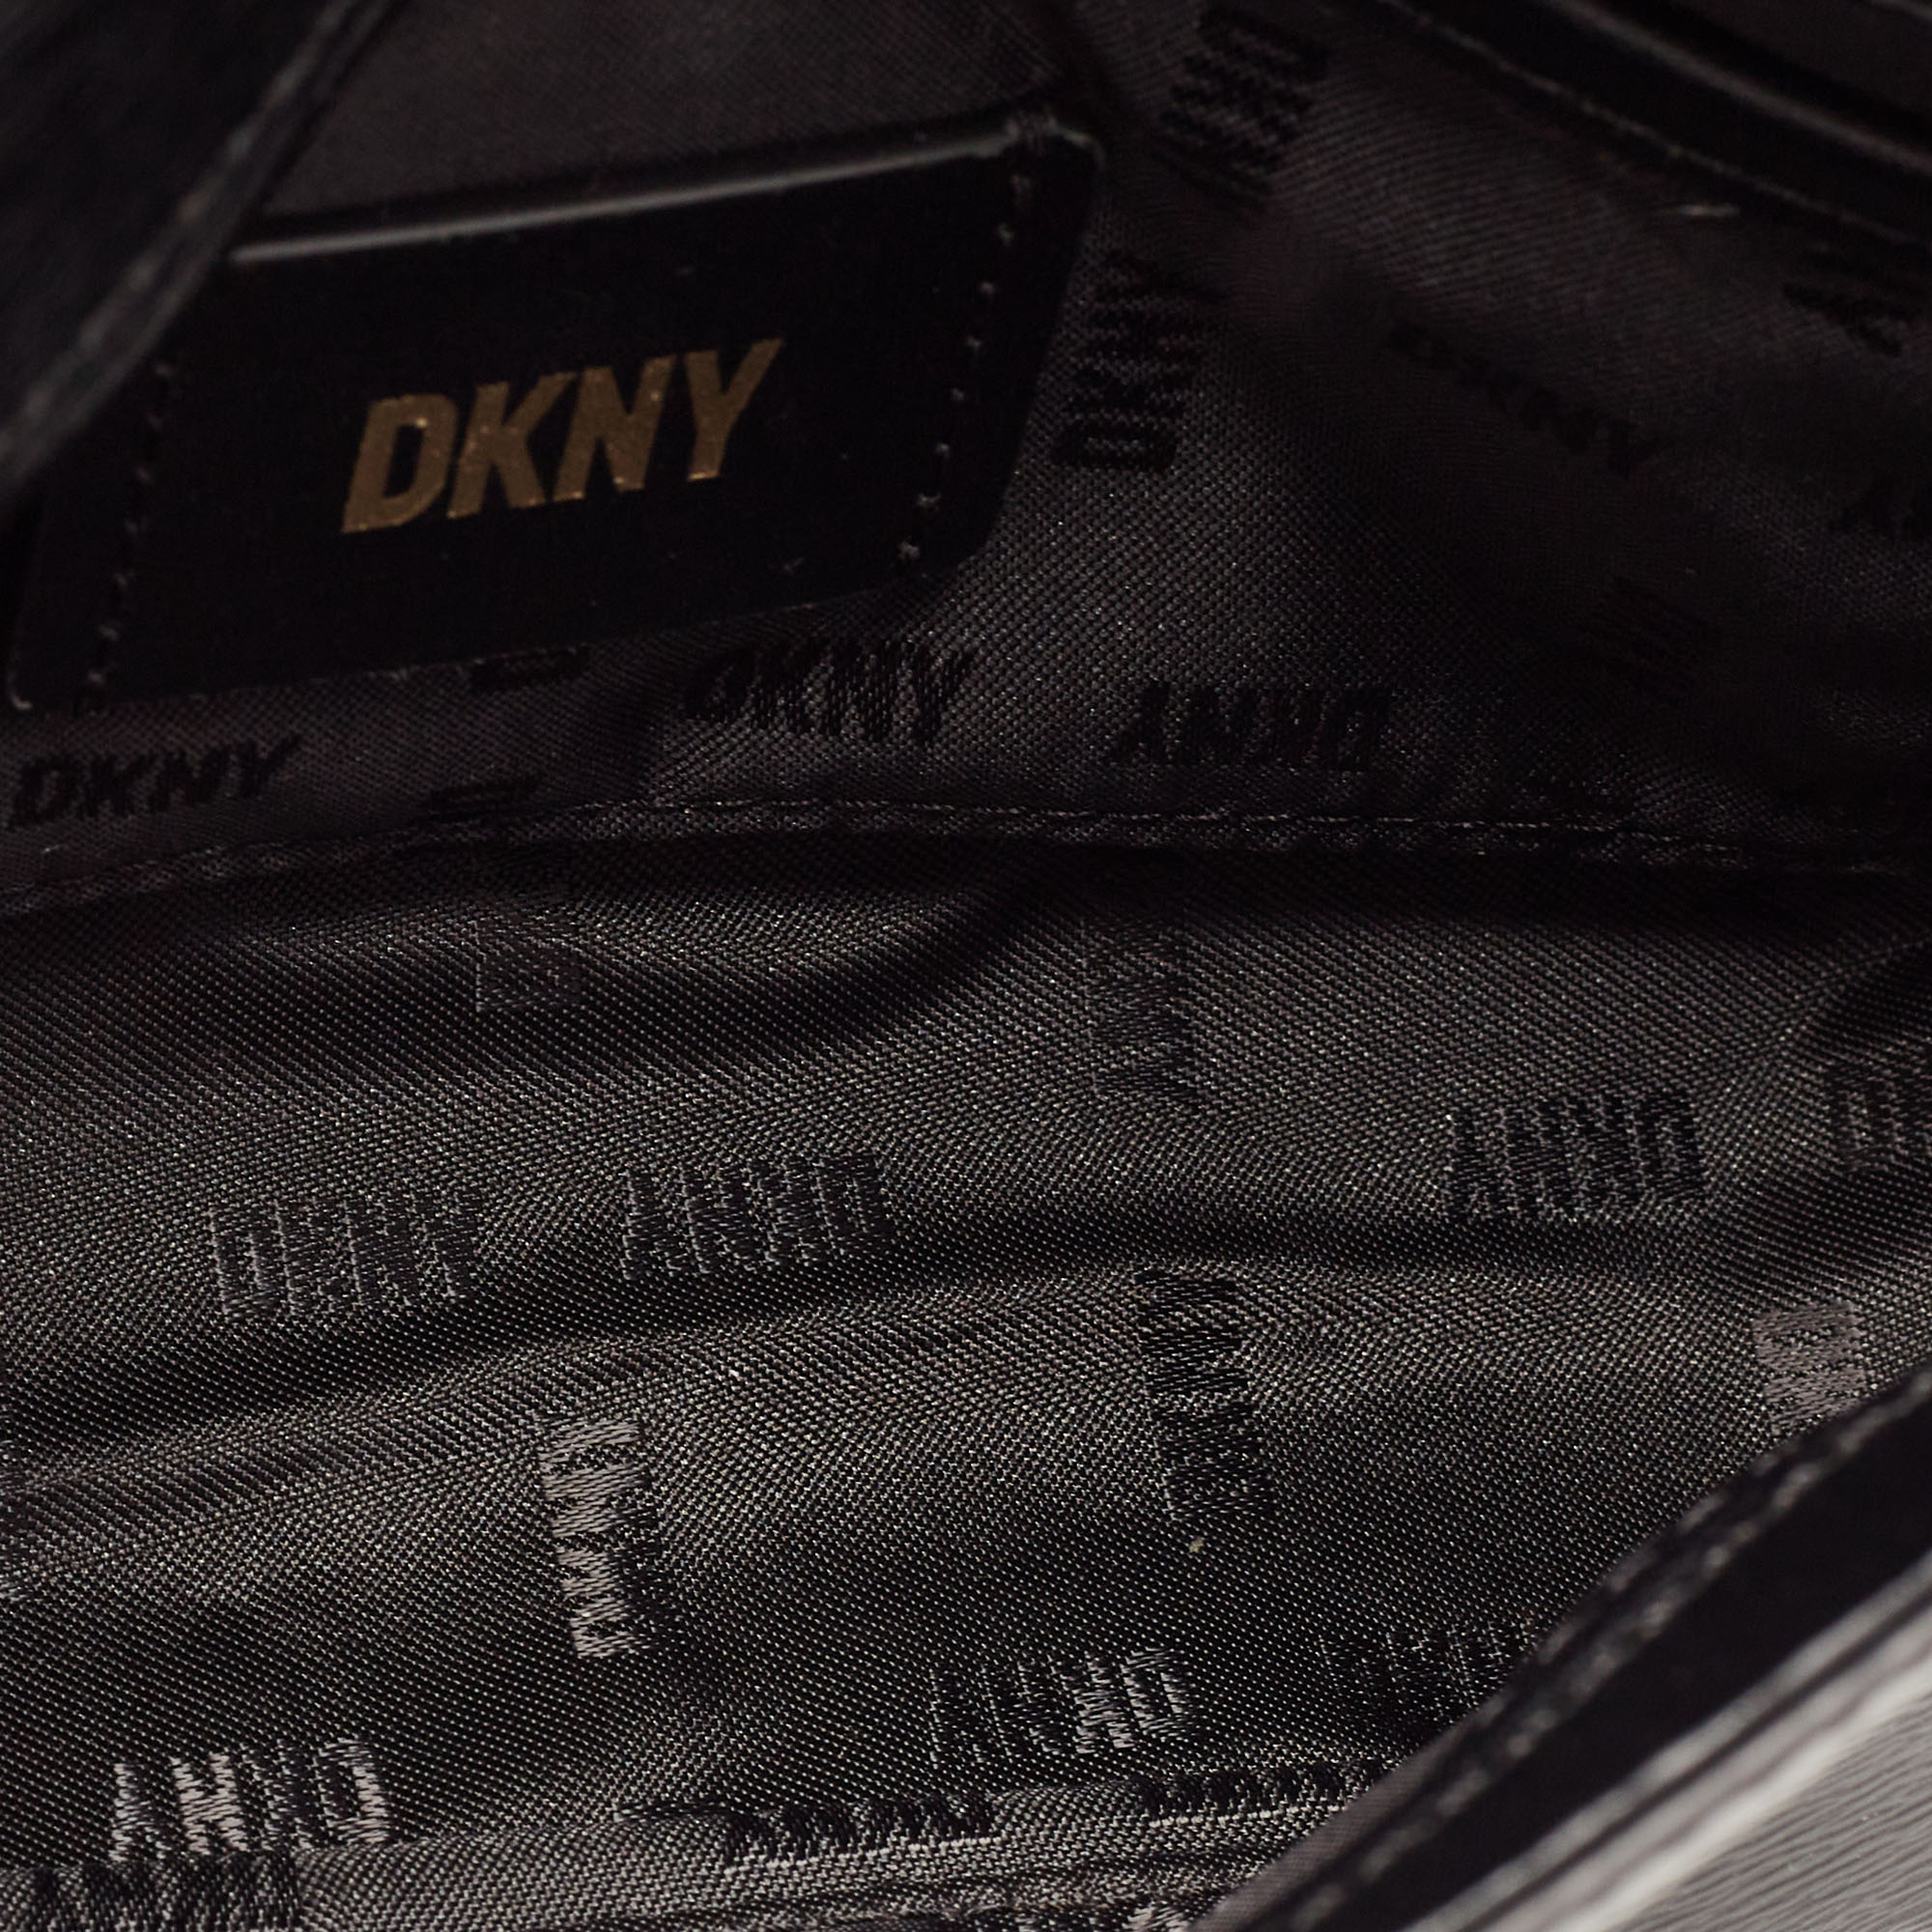 Dkny Black Leather Bryant Park Flap Crossbody Bag